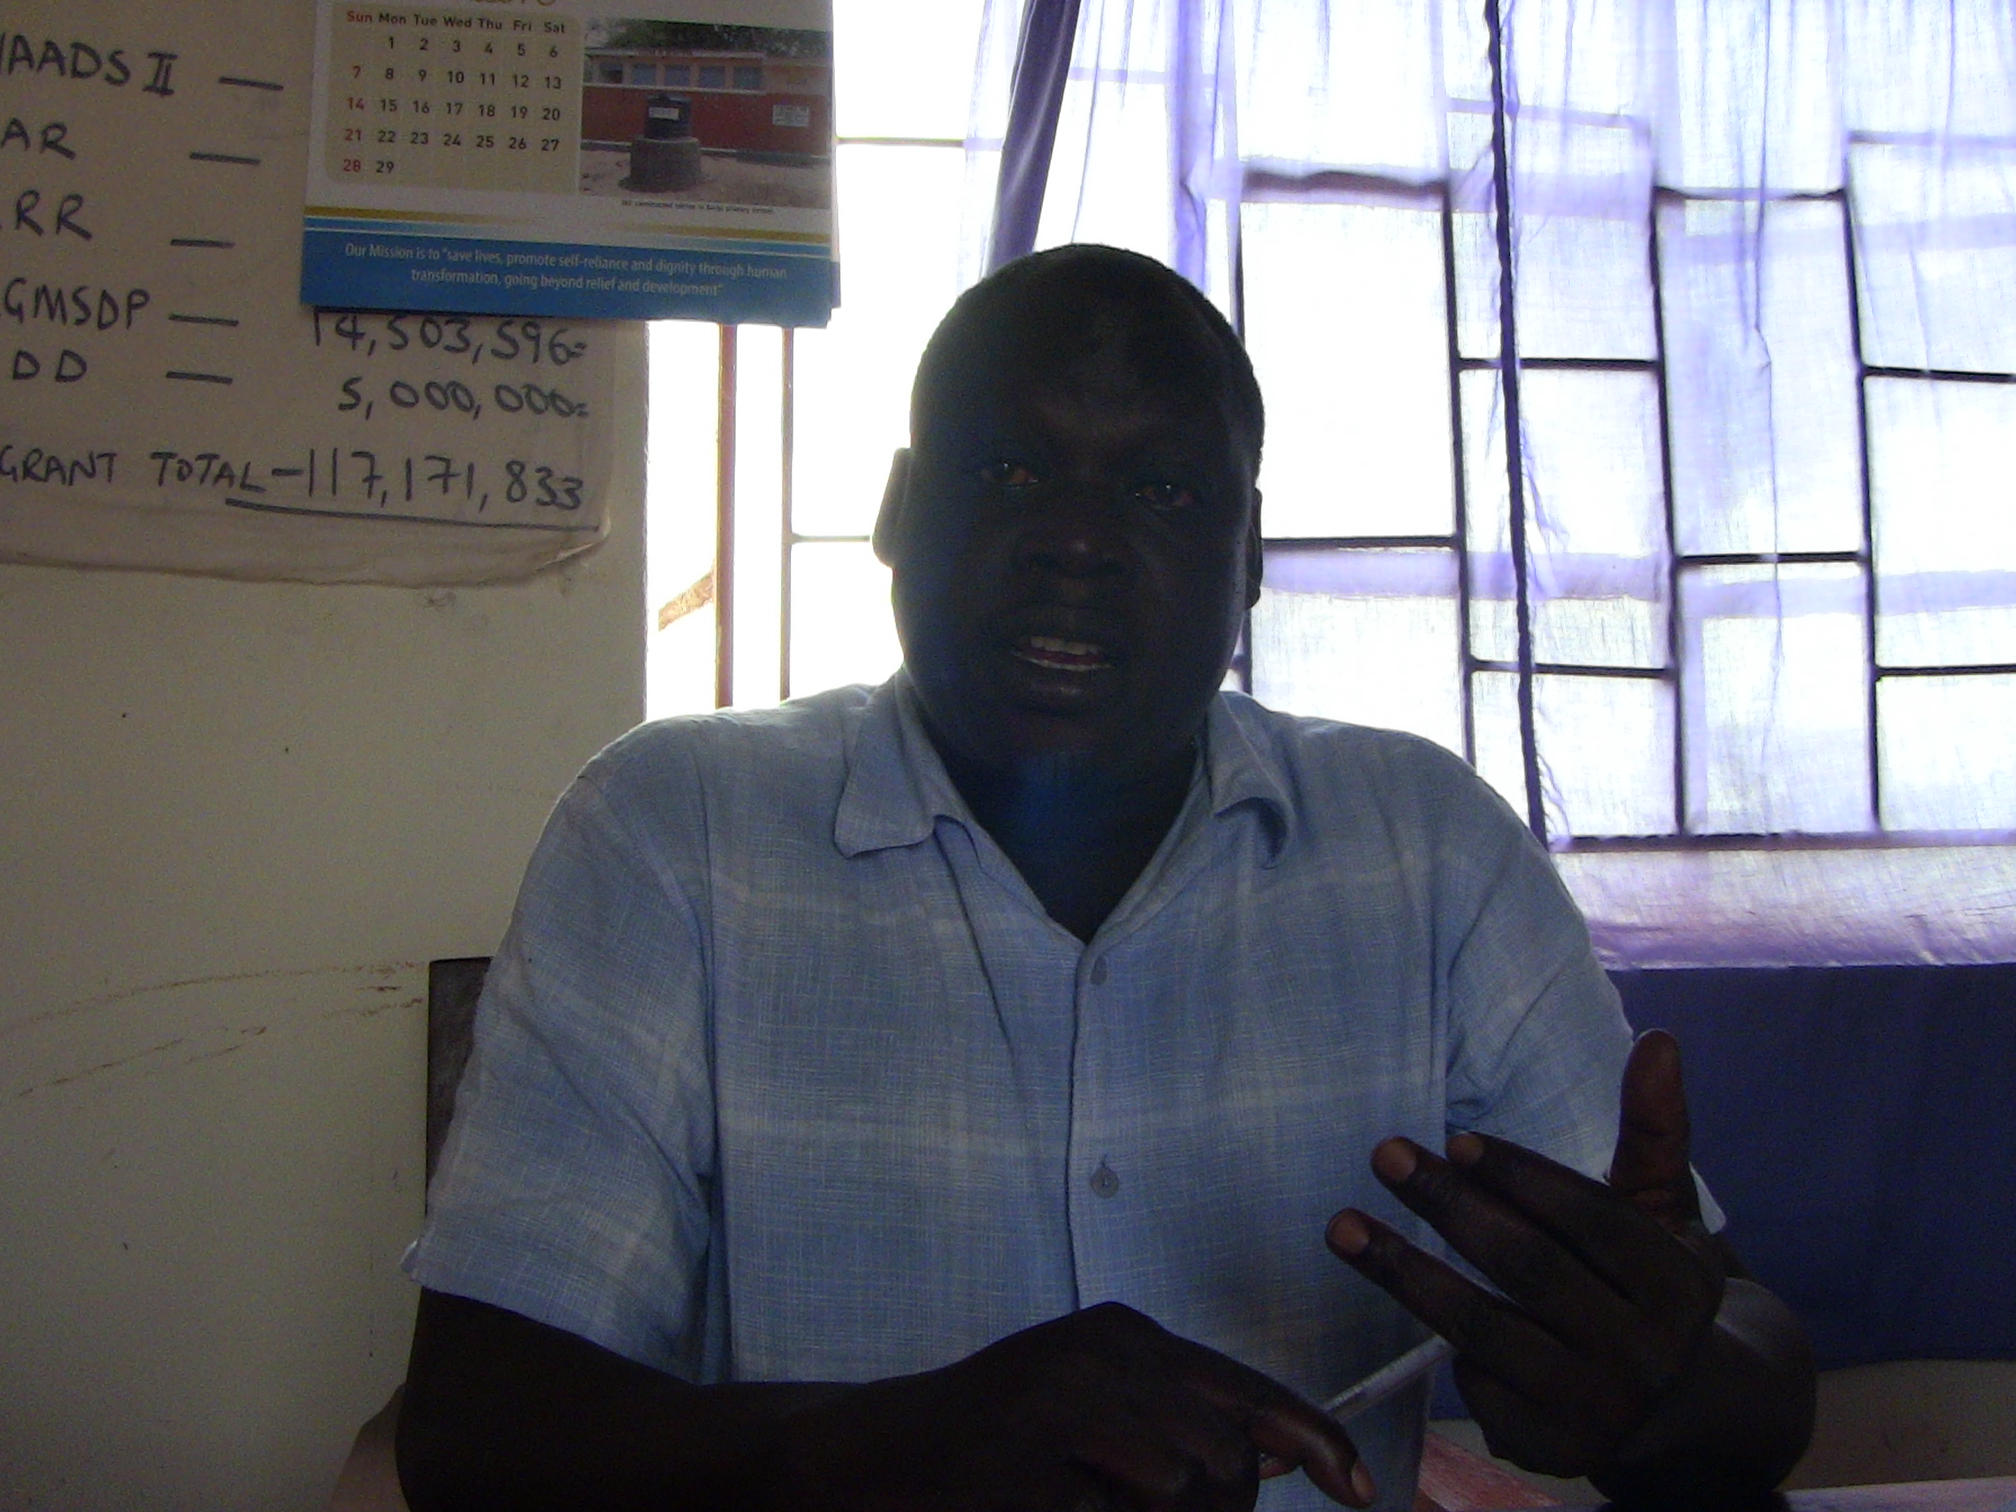 Puranga sub county chief, Emmanuel Oguti on speaking to press on Tuesday afternoon